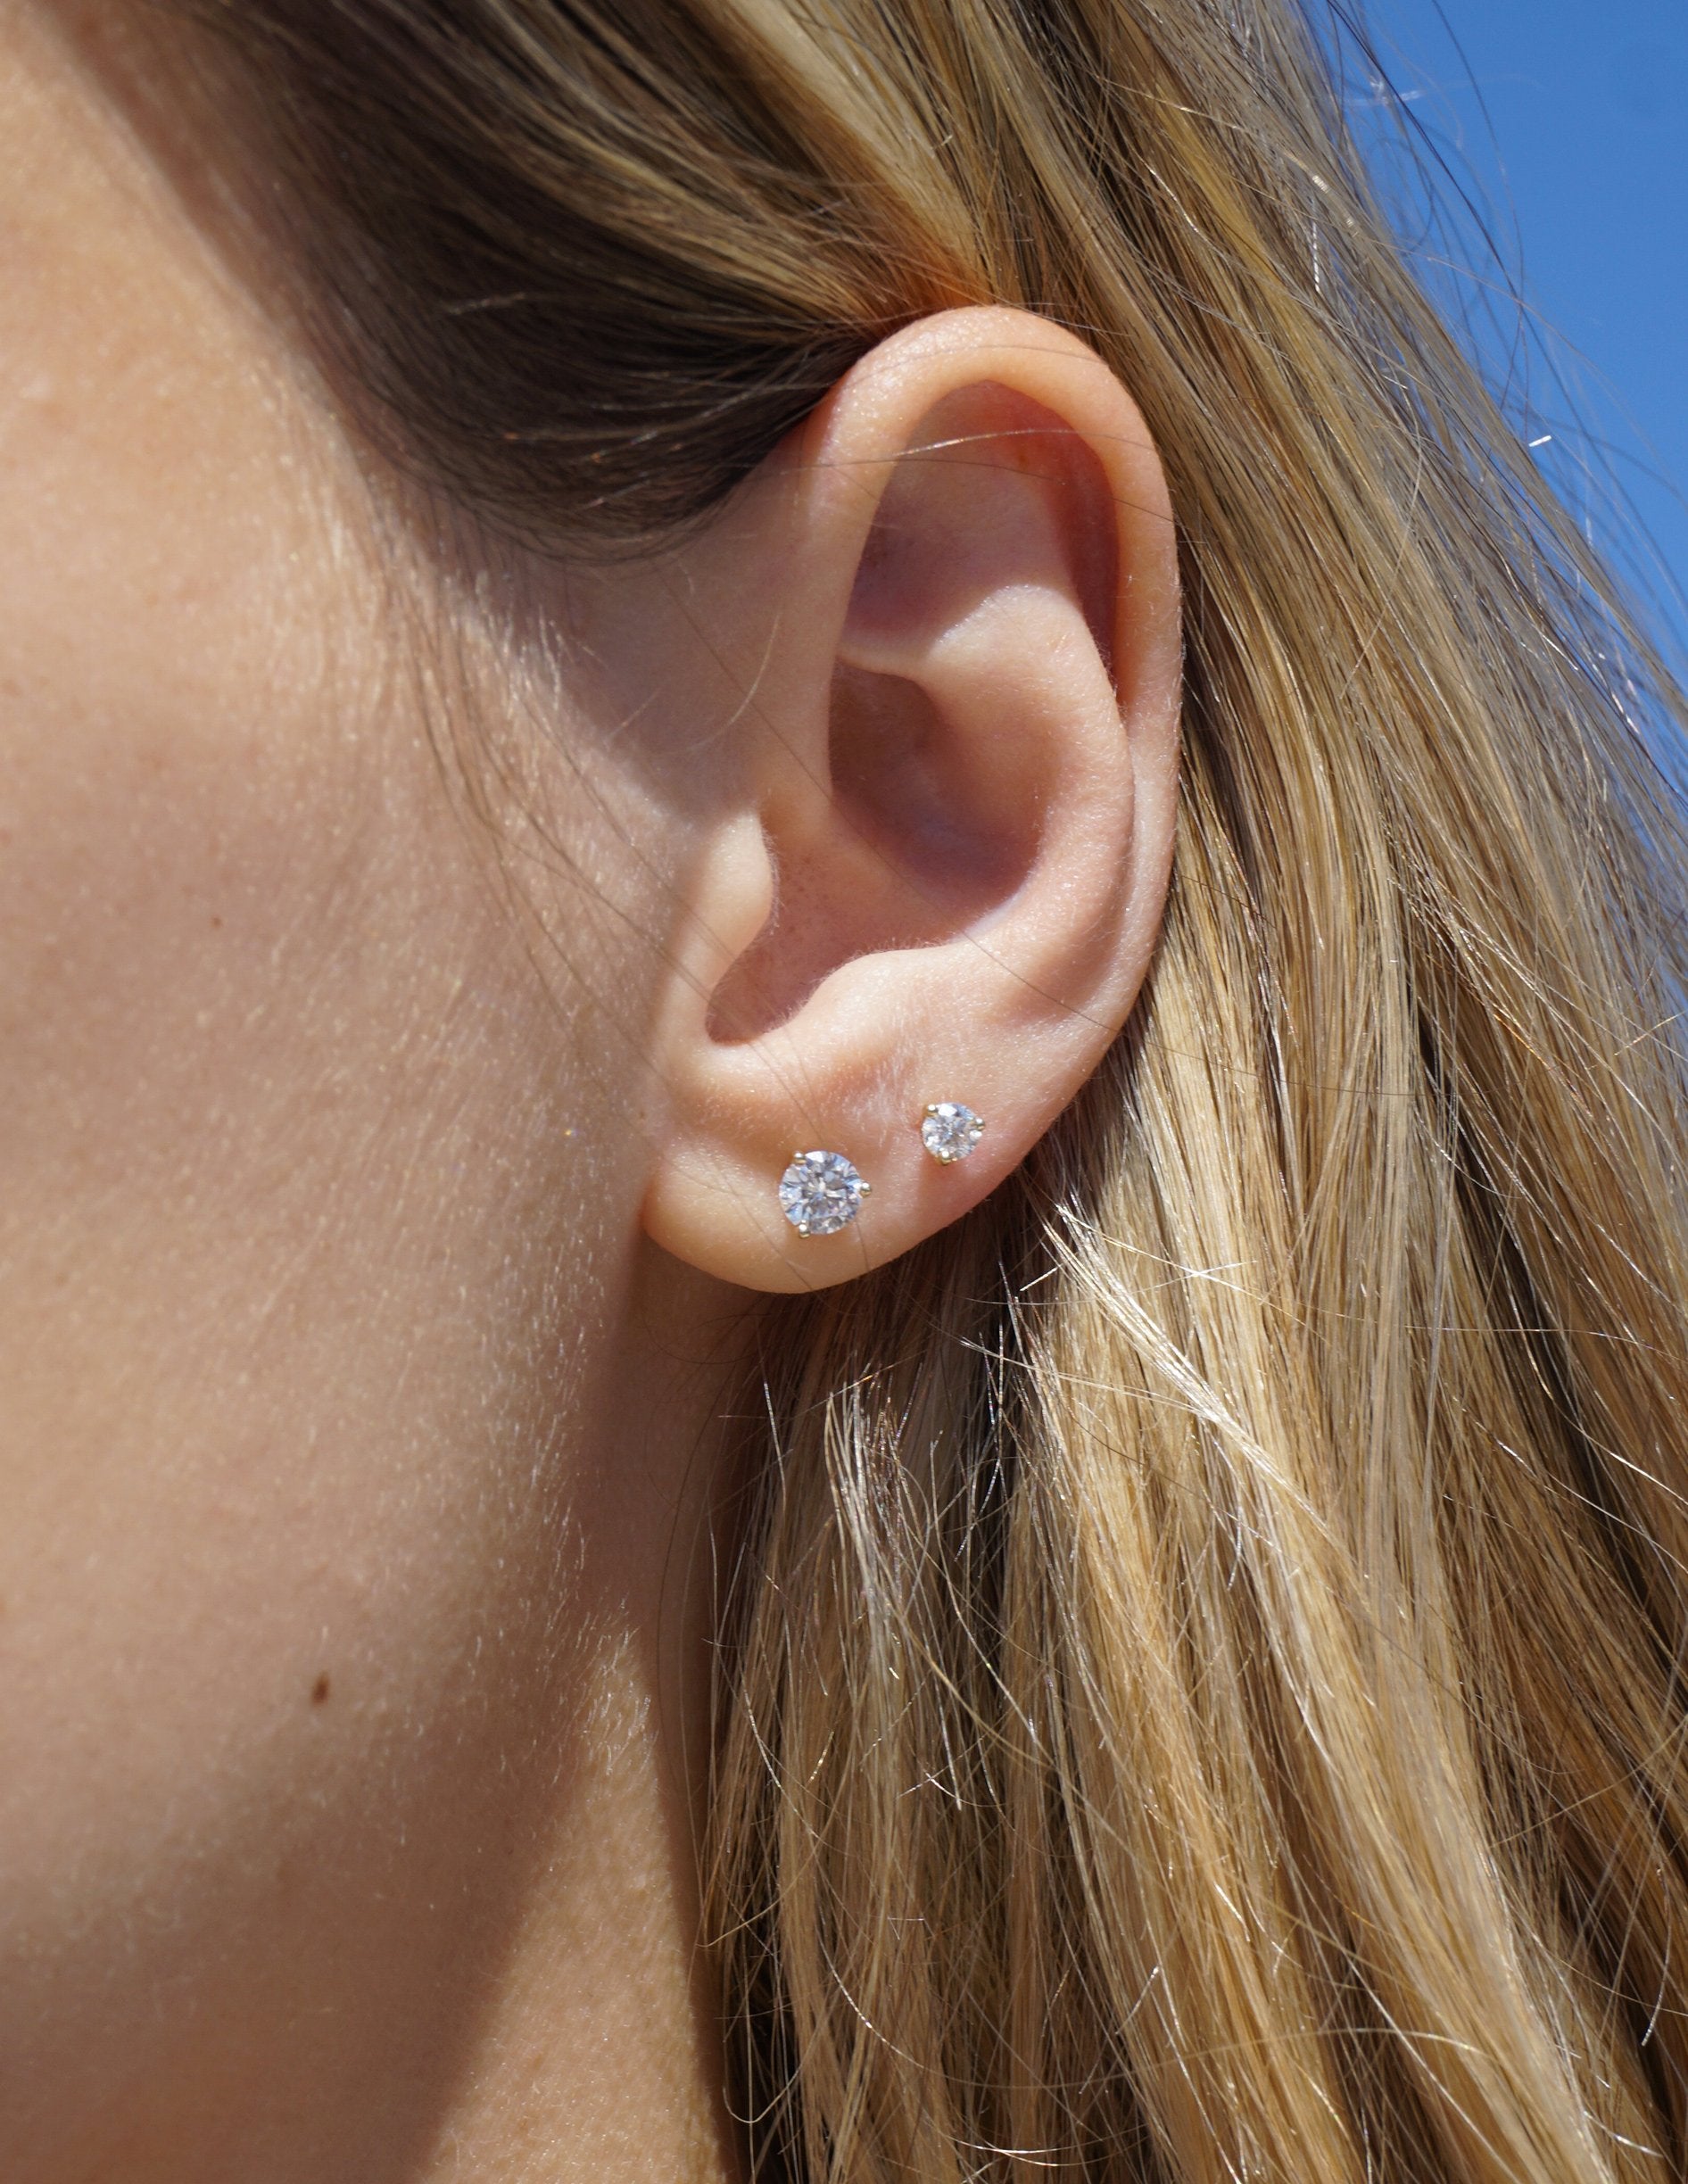 Lab-Grown Diamond Stud Earrings in Yellow Gold (0.25 carats)